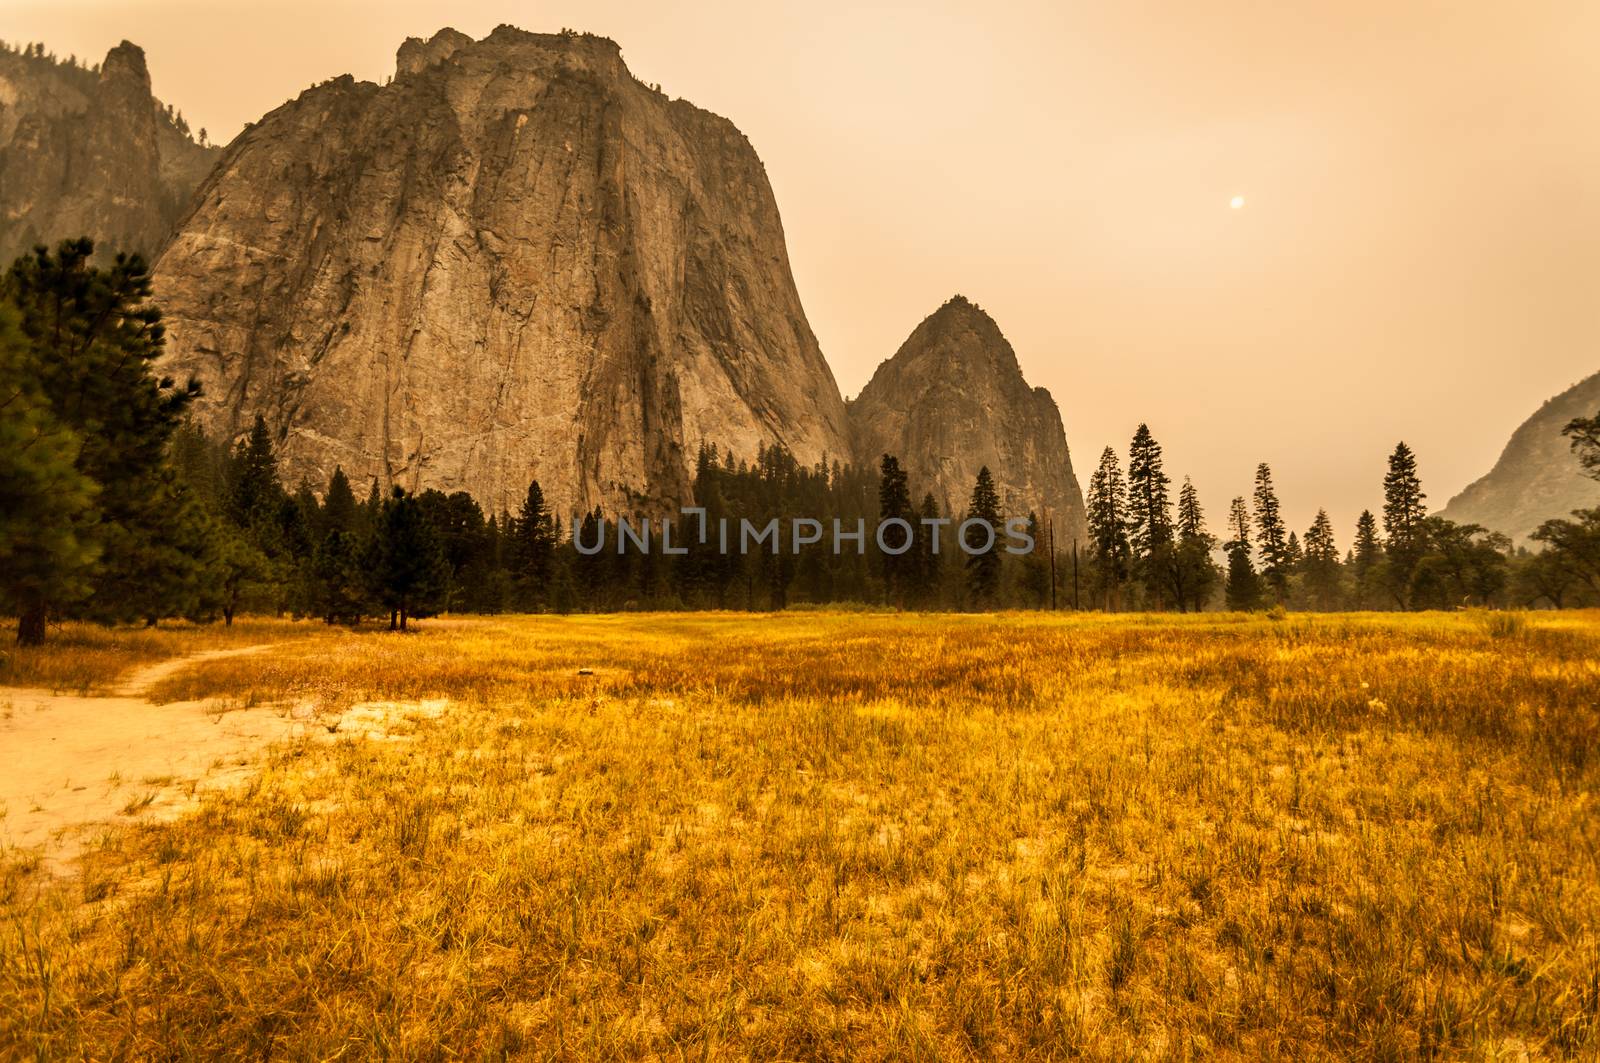 Yosemite on fire august 2013